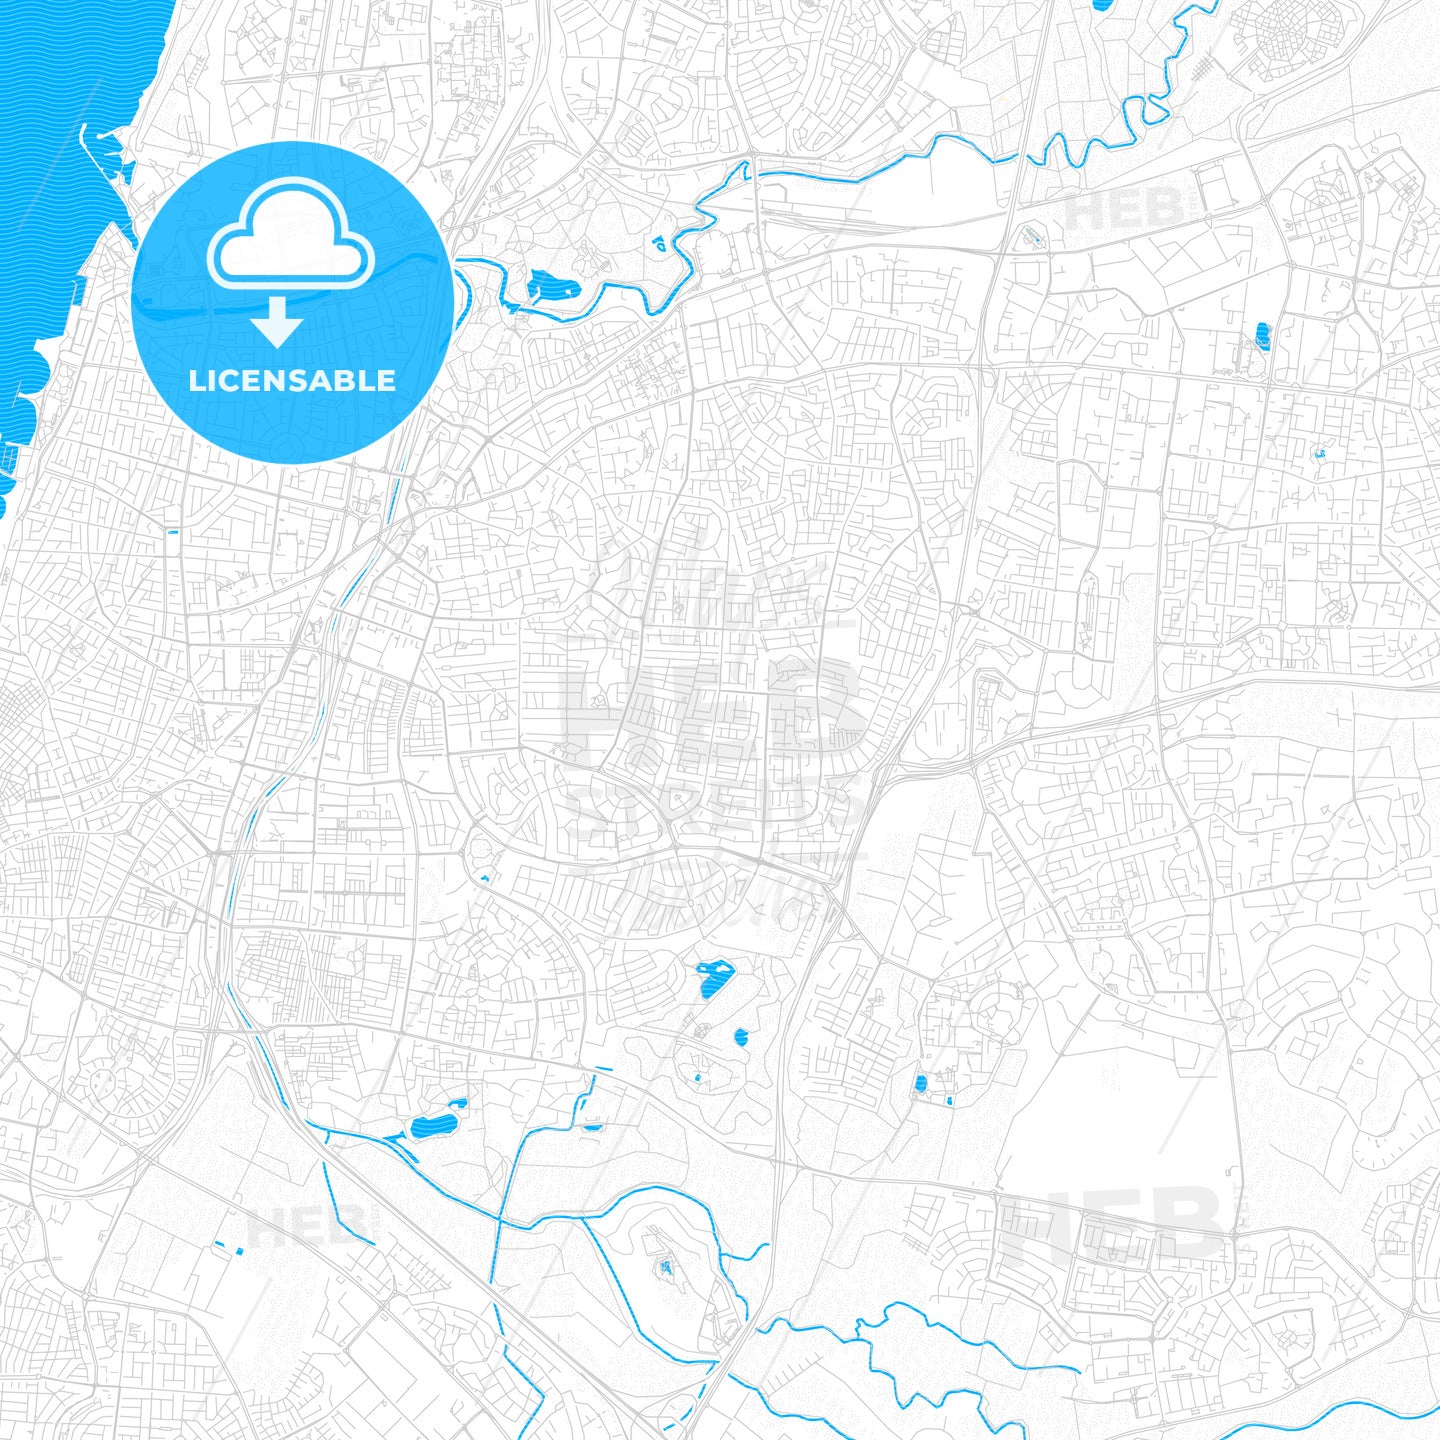 Ramat Gan, Israel PDF vector map with water in focus